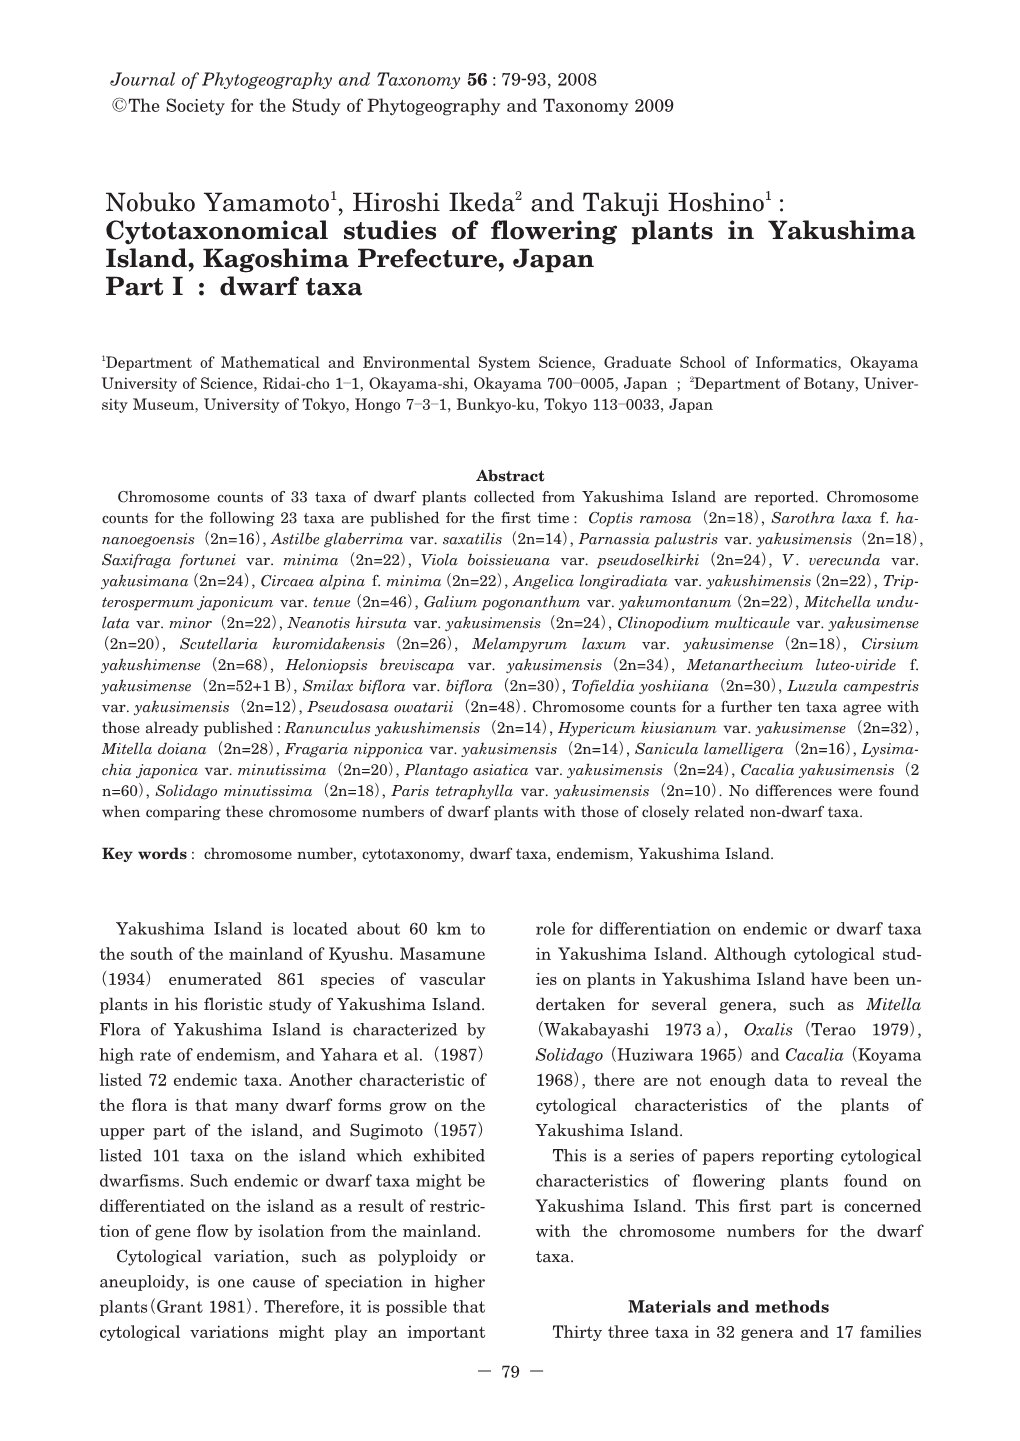 Cytotaxonomical Studies of Flowering Plants in Yakushima Island, Kagoshima Prefecture, Japan Part I : Dwarf Taxa